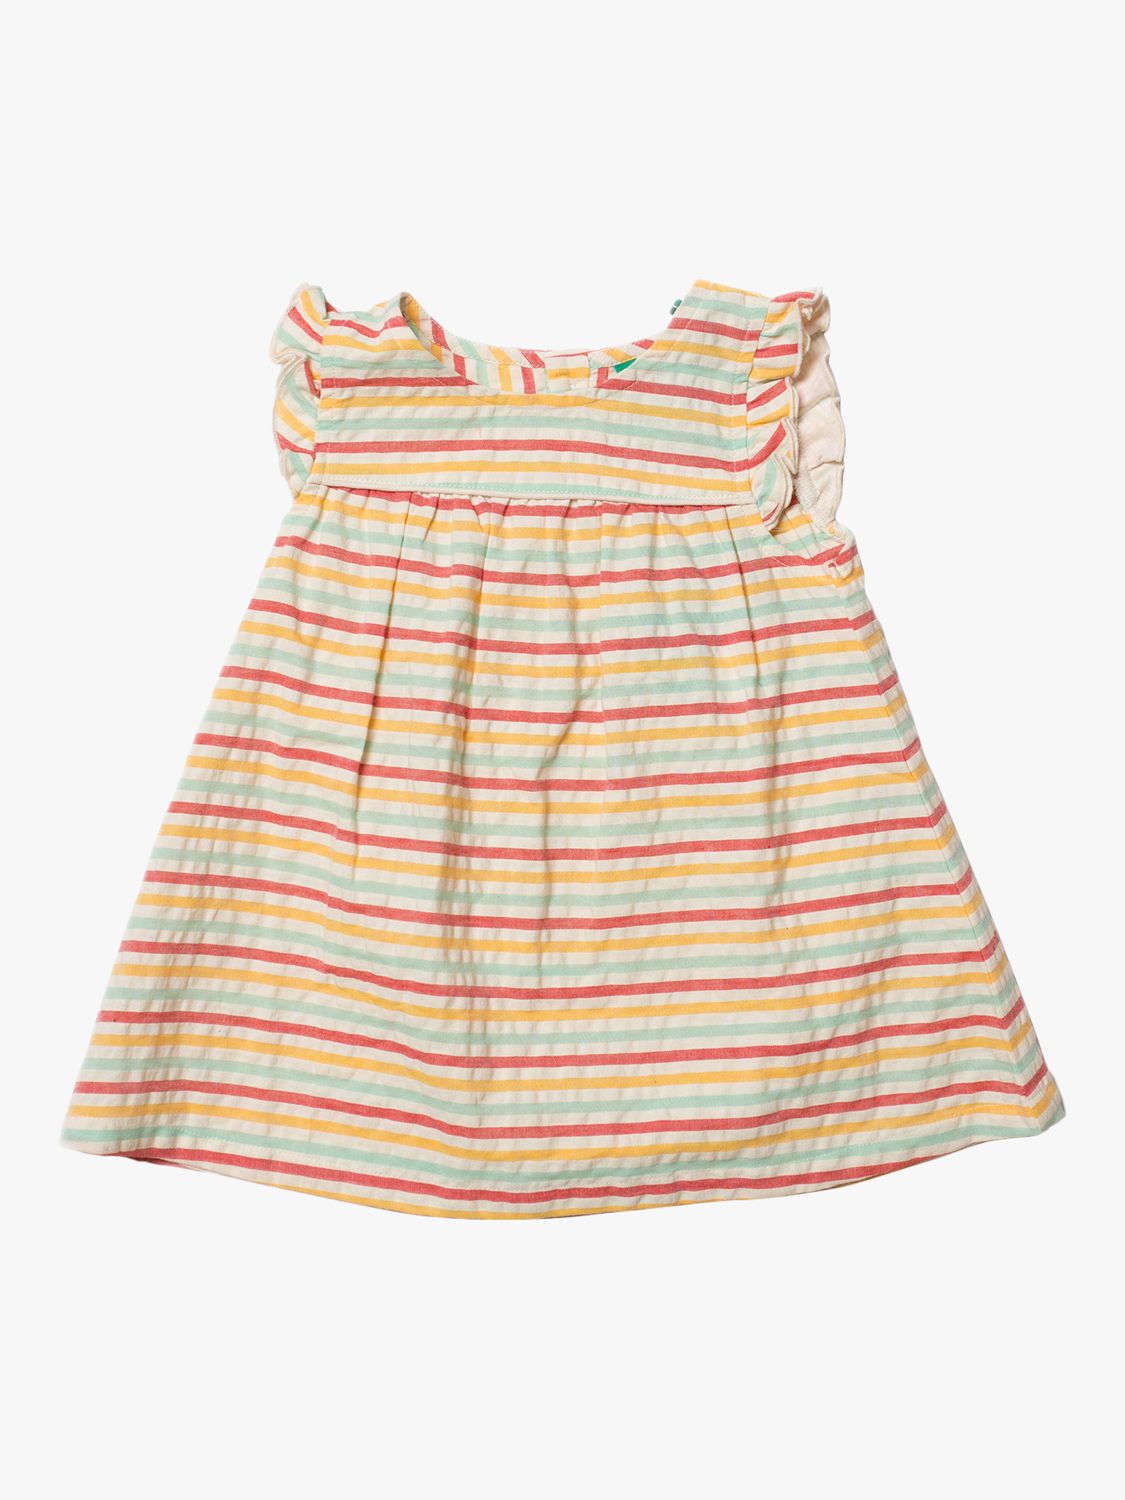 Little Green Radicals Baby Organic Cotton Sunset Stripe Frill Dress, Multi, 0-3 months